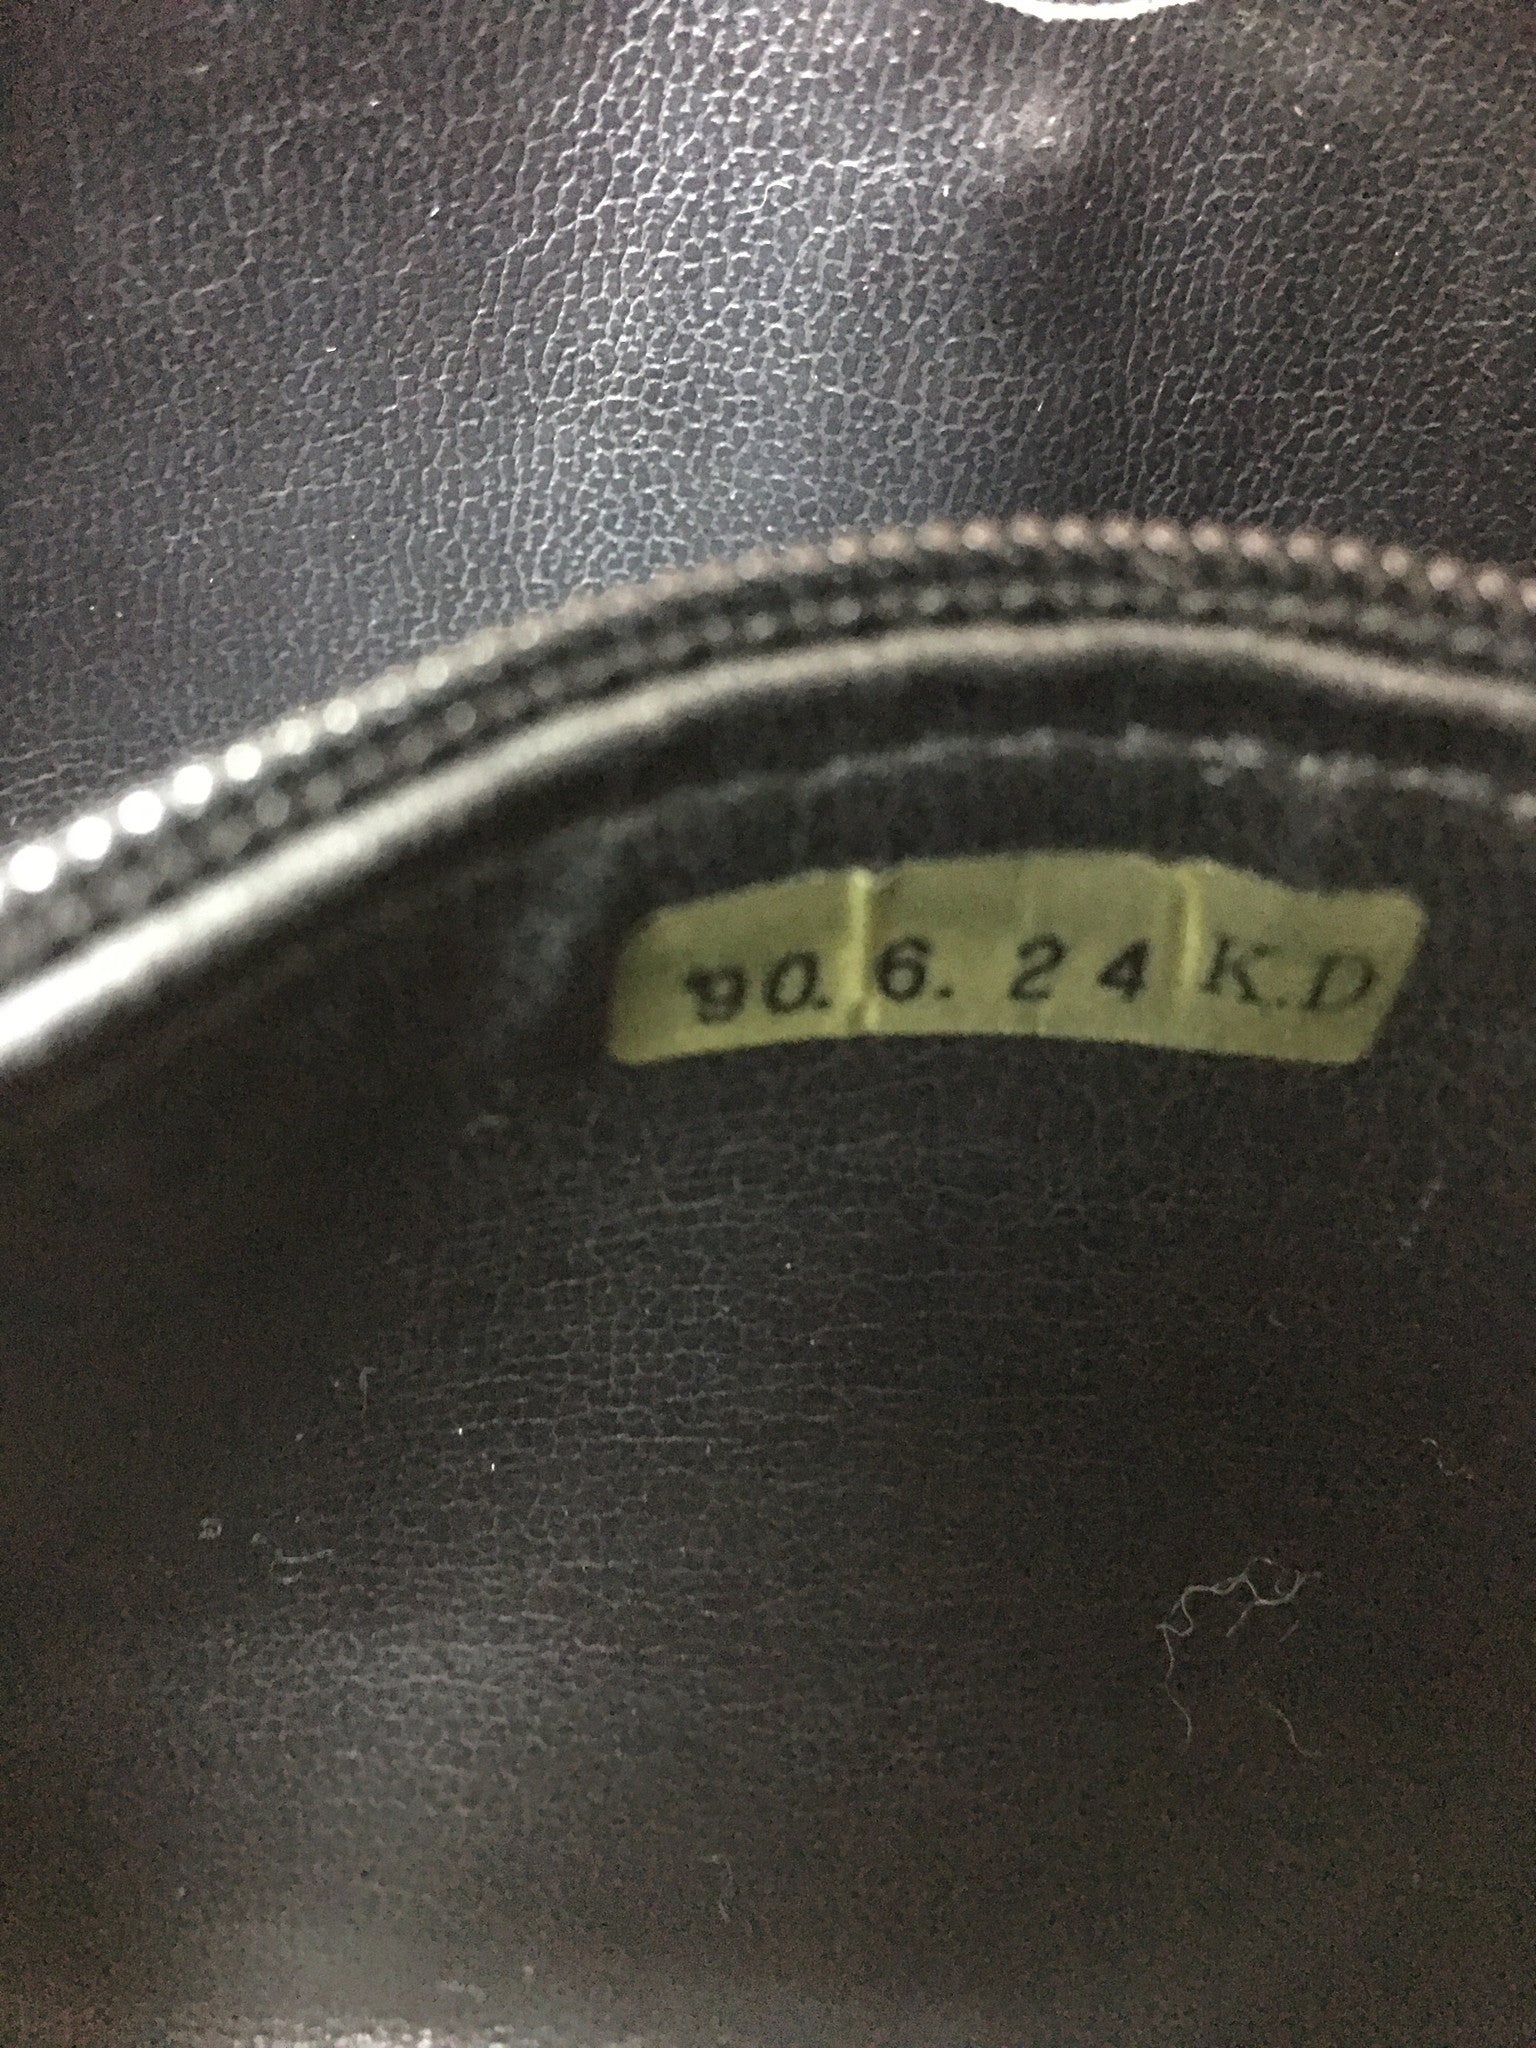 CHANEL Black Lambskin Quilted Bum Bag (Waist Bag)